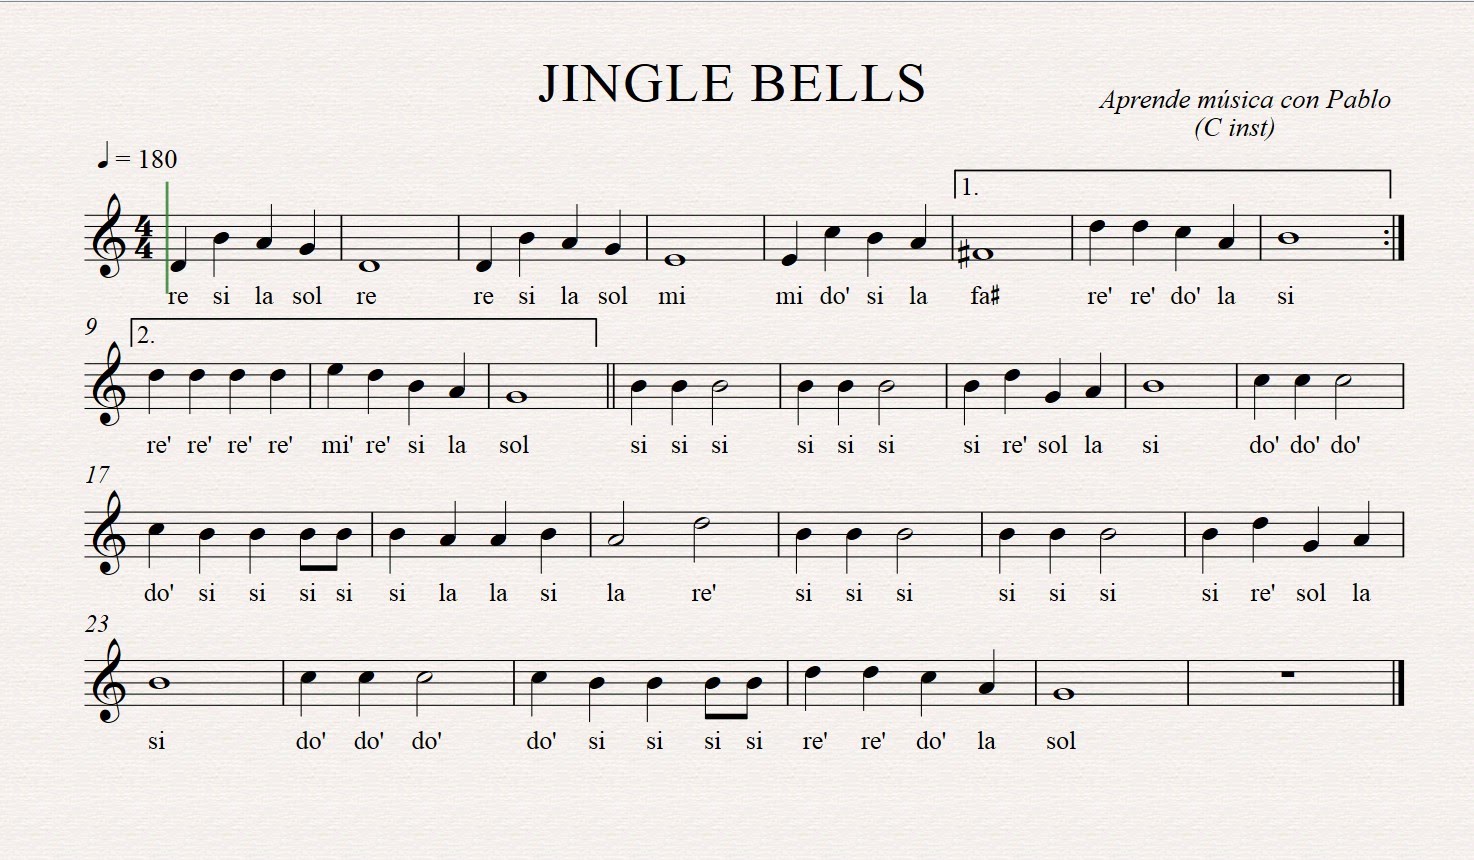 perdonar Decimal obispo La clase de Música de Pedro: "Dulce Navidad" "Jingle Bells" para flauta.